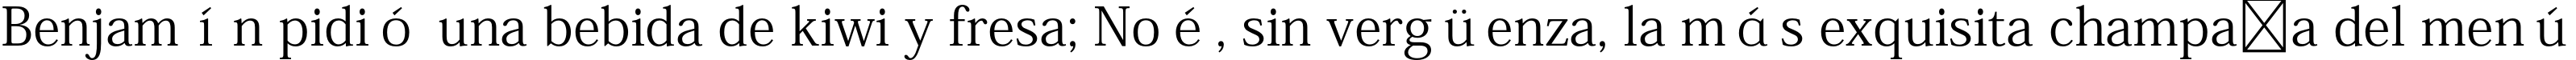 Пример написания шрифтом Adobe Kaiti Std R текста на испанском